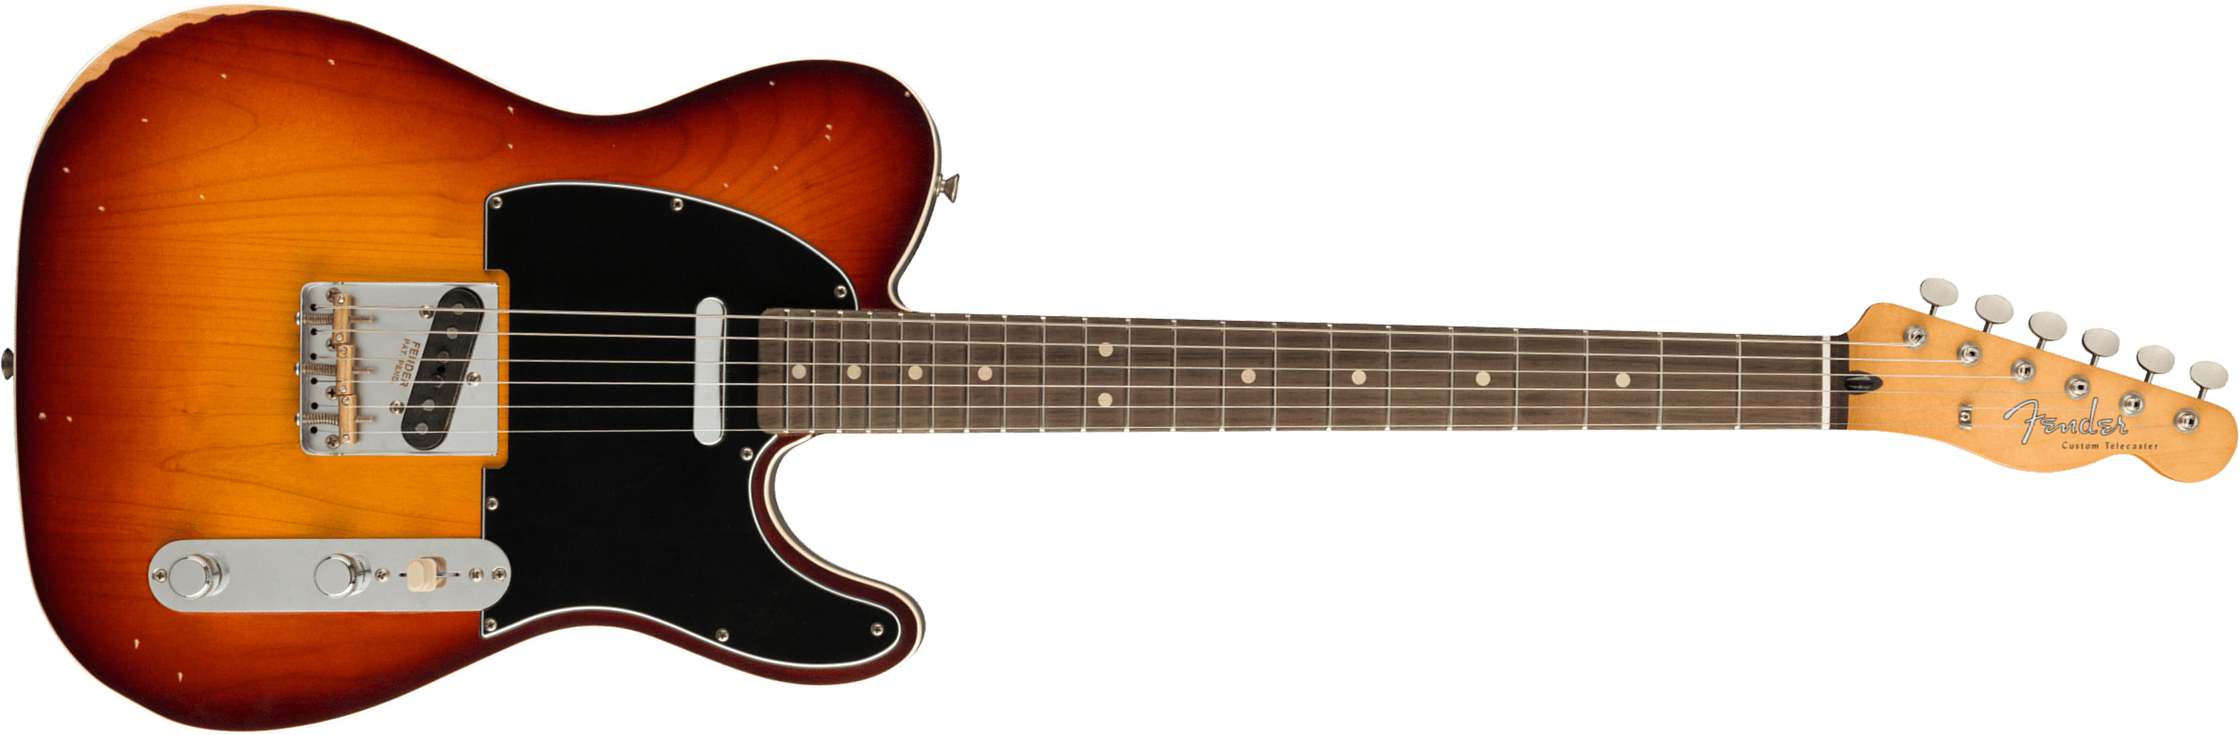 Fender Jason Isbell Tele Custom Signature Rw +housse - Road Worn 3-color Chocolate Burst - Guitare Électrique Forme Tel - Main picture